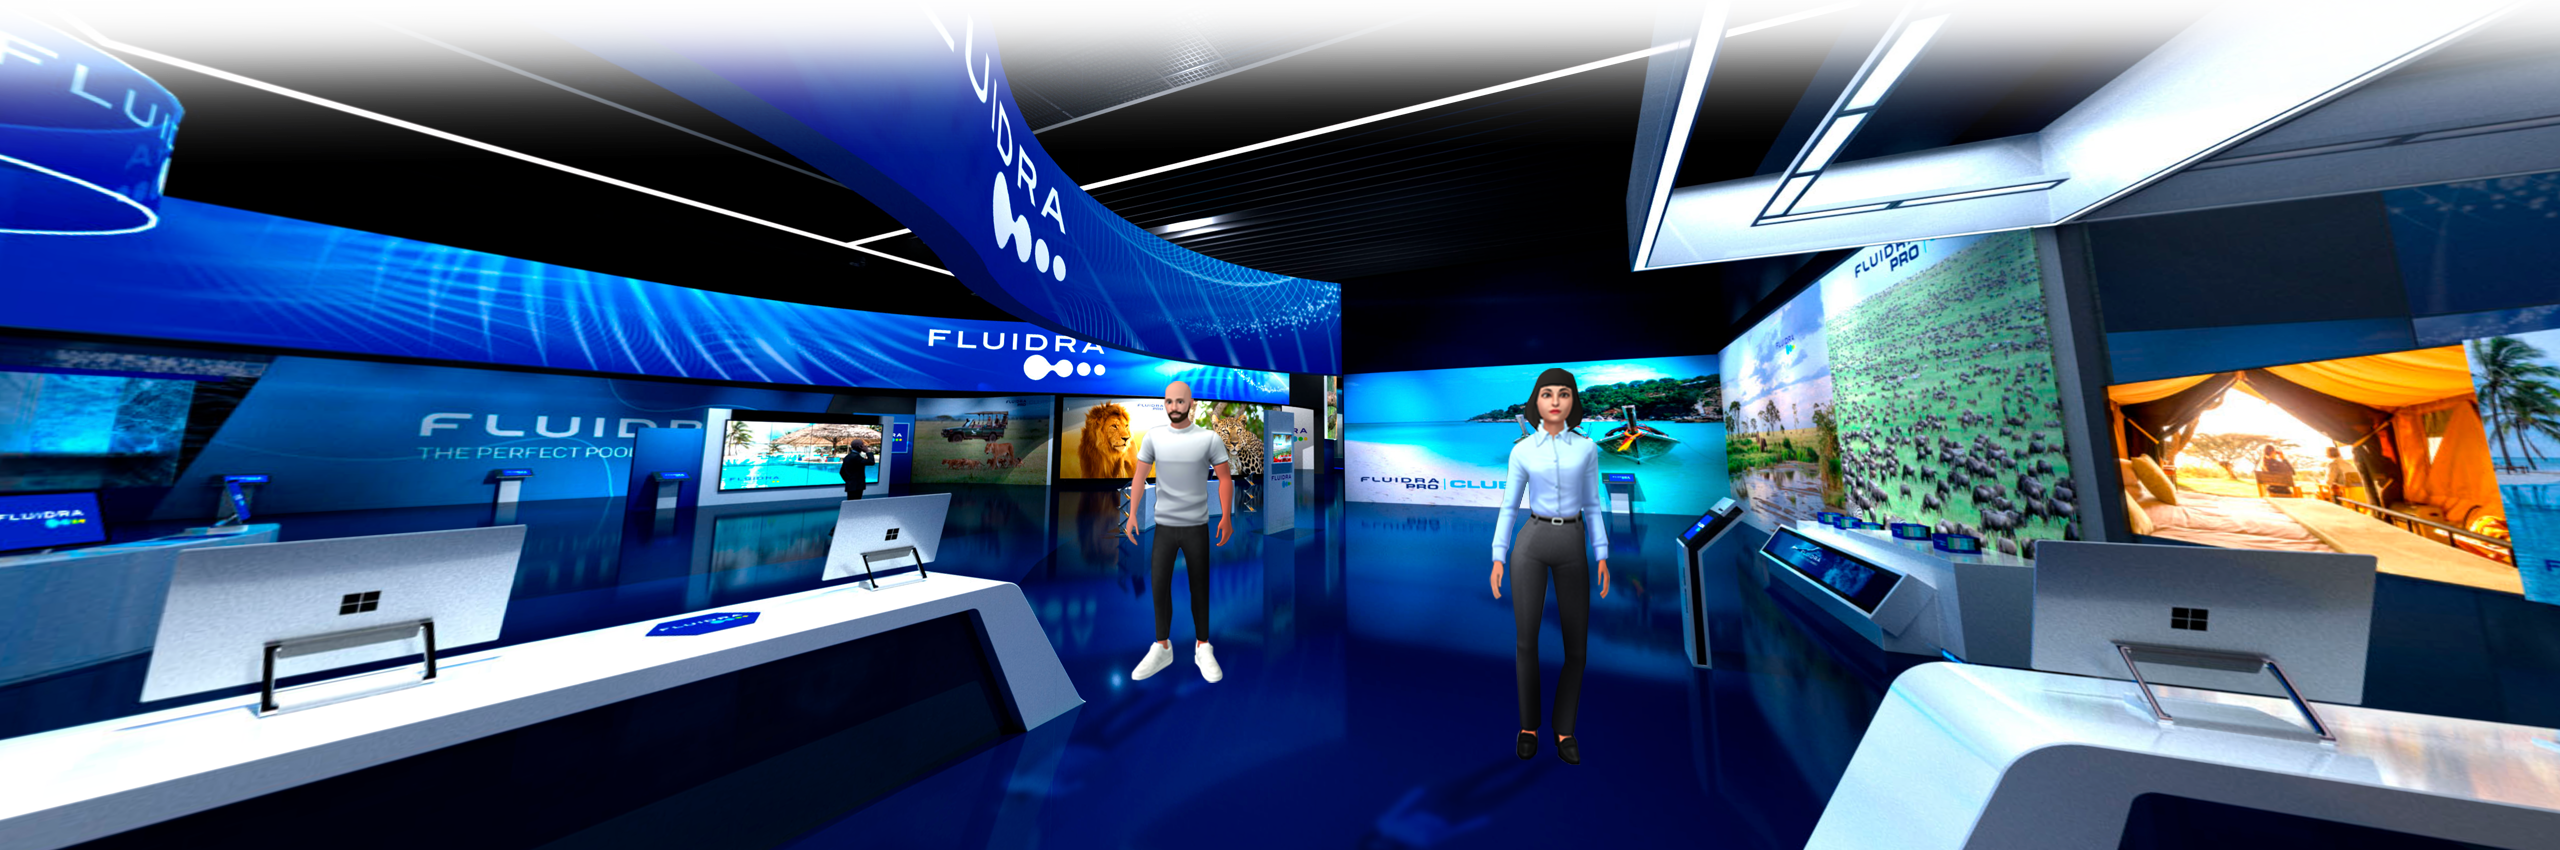 fluidra-avatars-virtual-booth